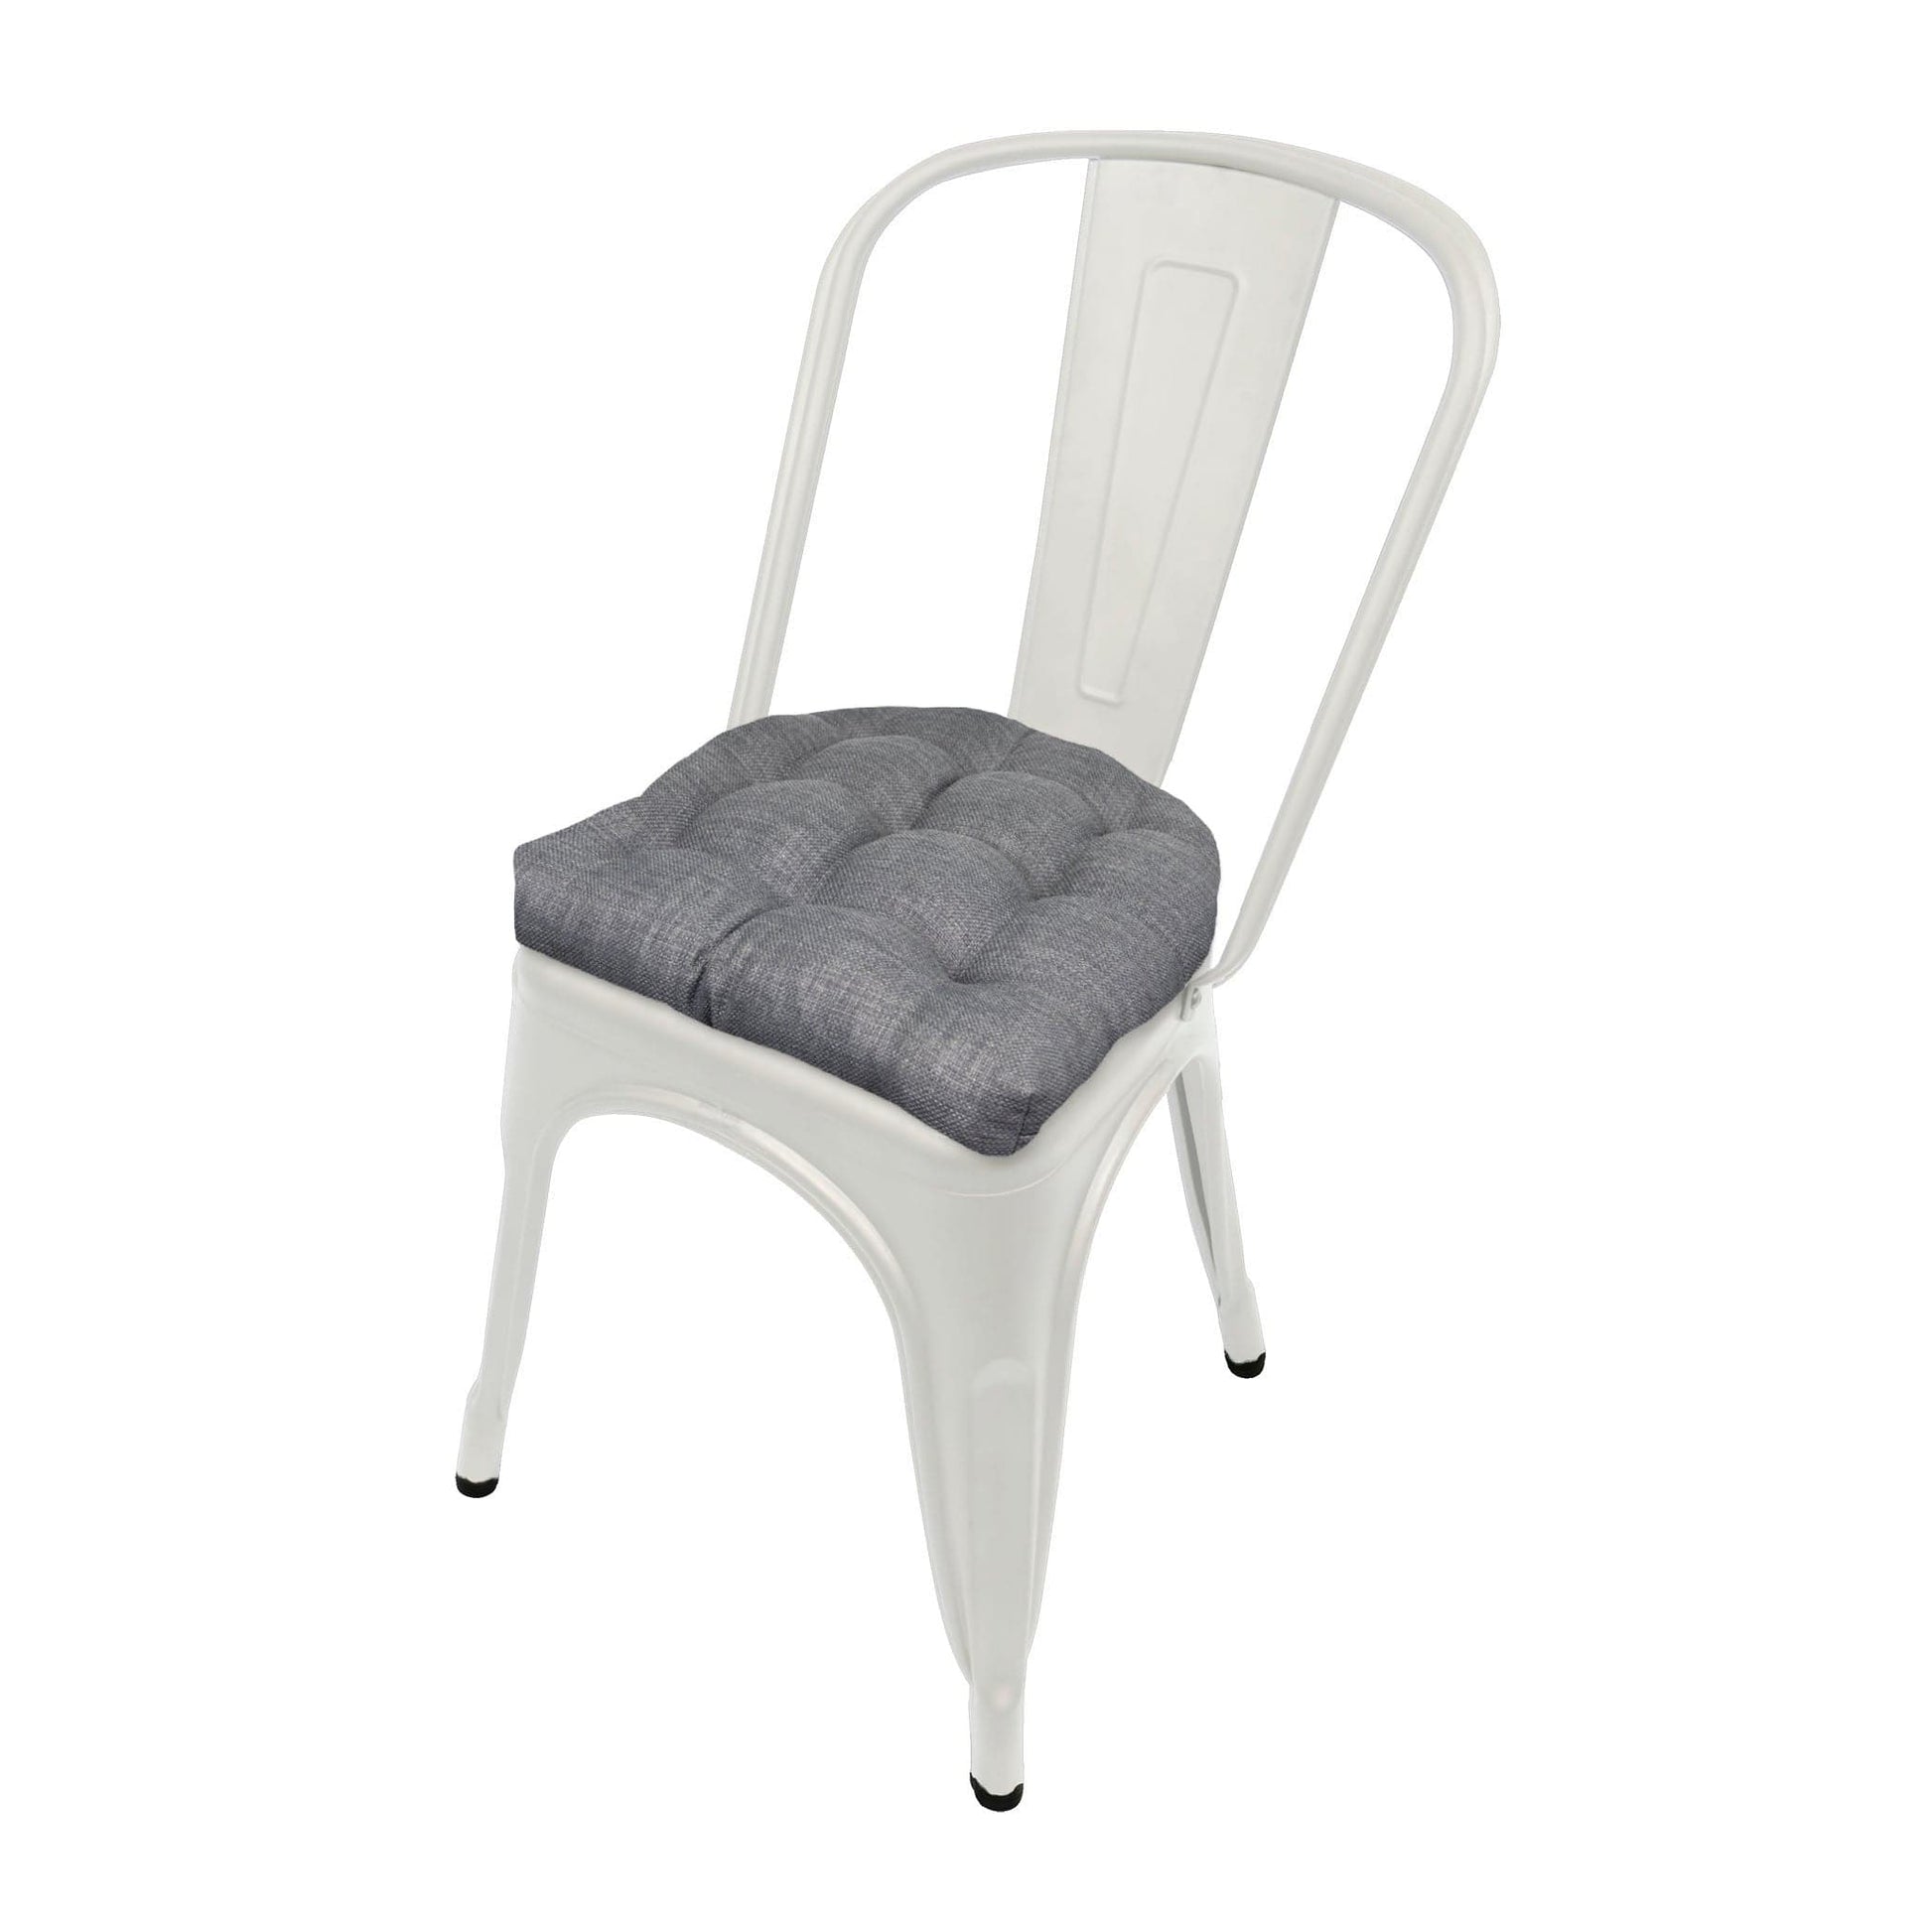 Rave Grey Industrial Tolix Chair Cushion - Barnett Home Decor